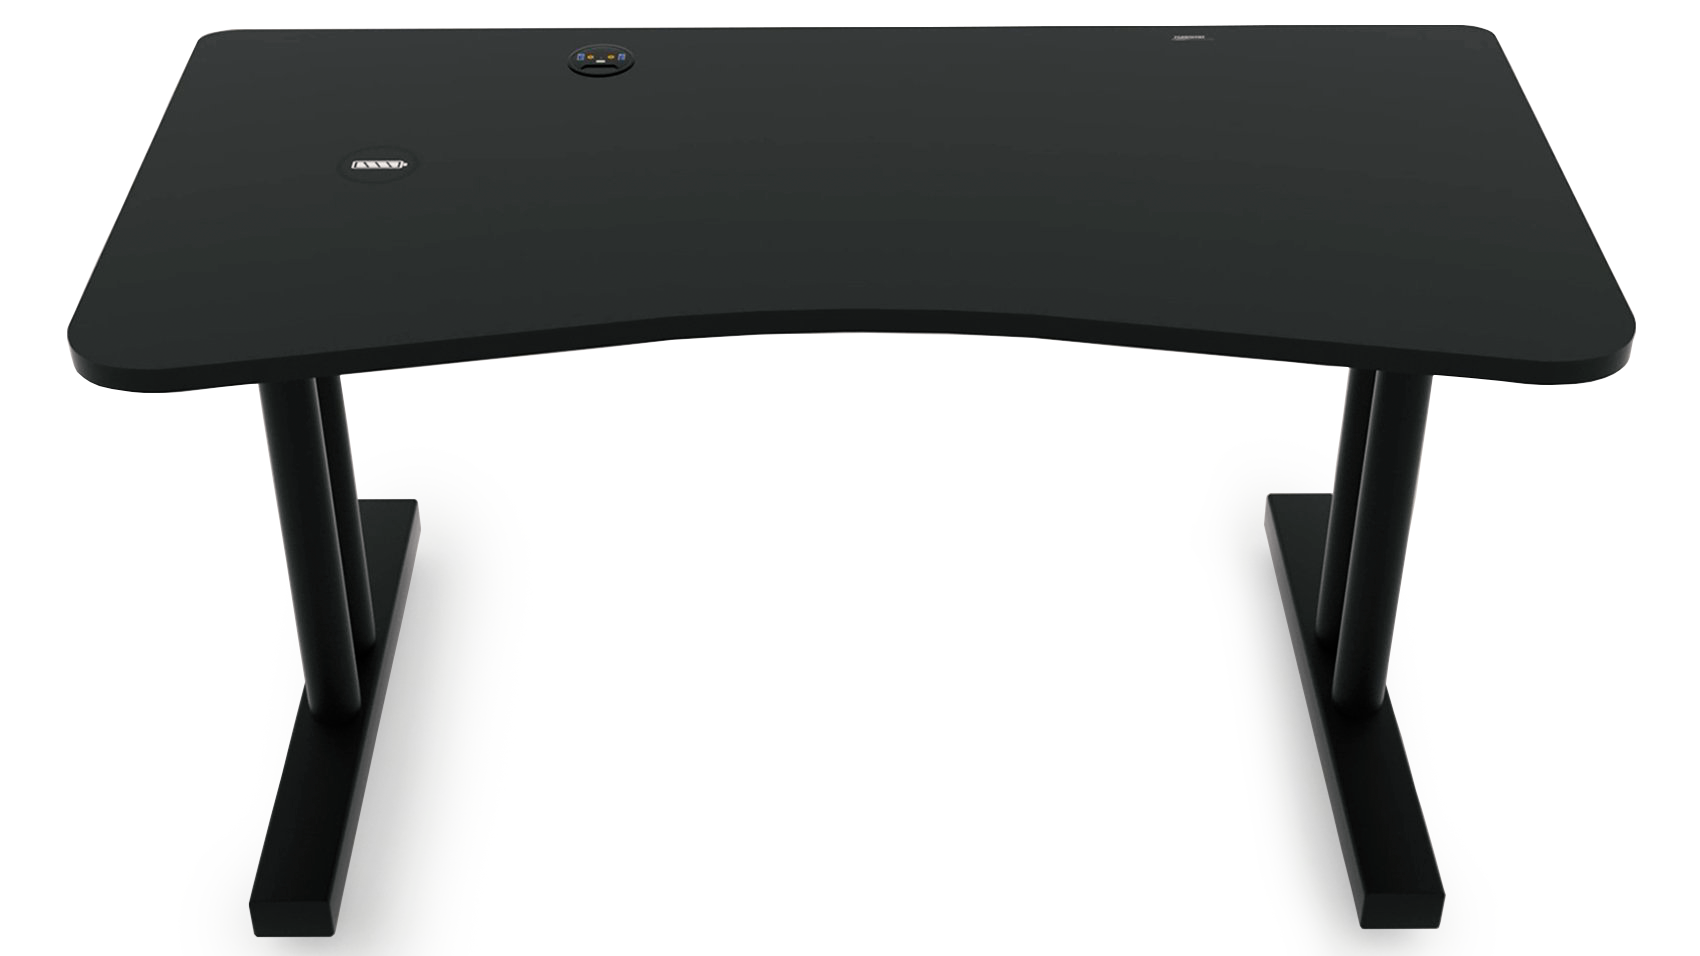 Infinity 2023 64 inch Gaming Desk